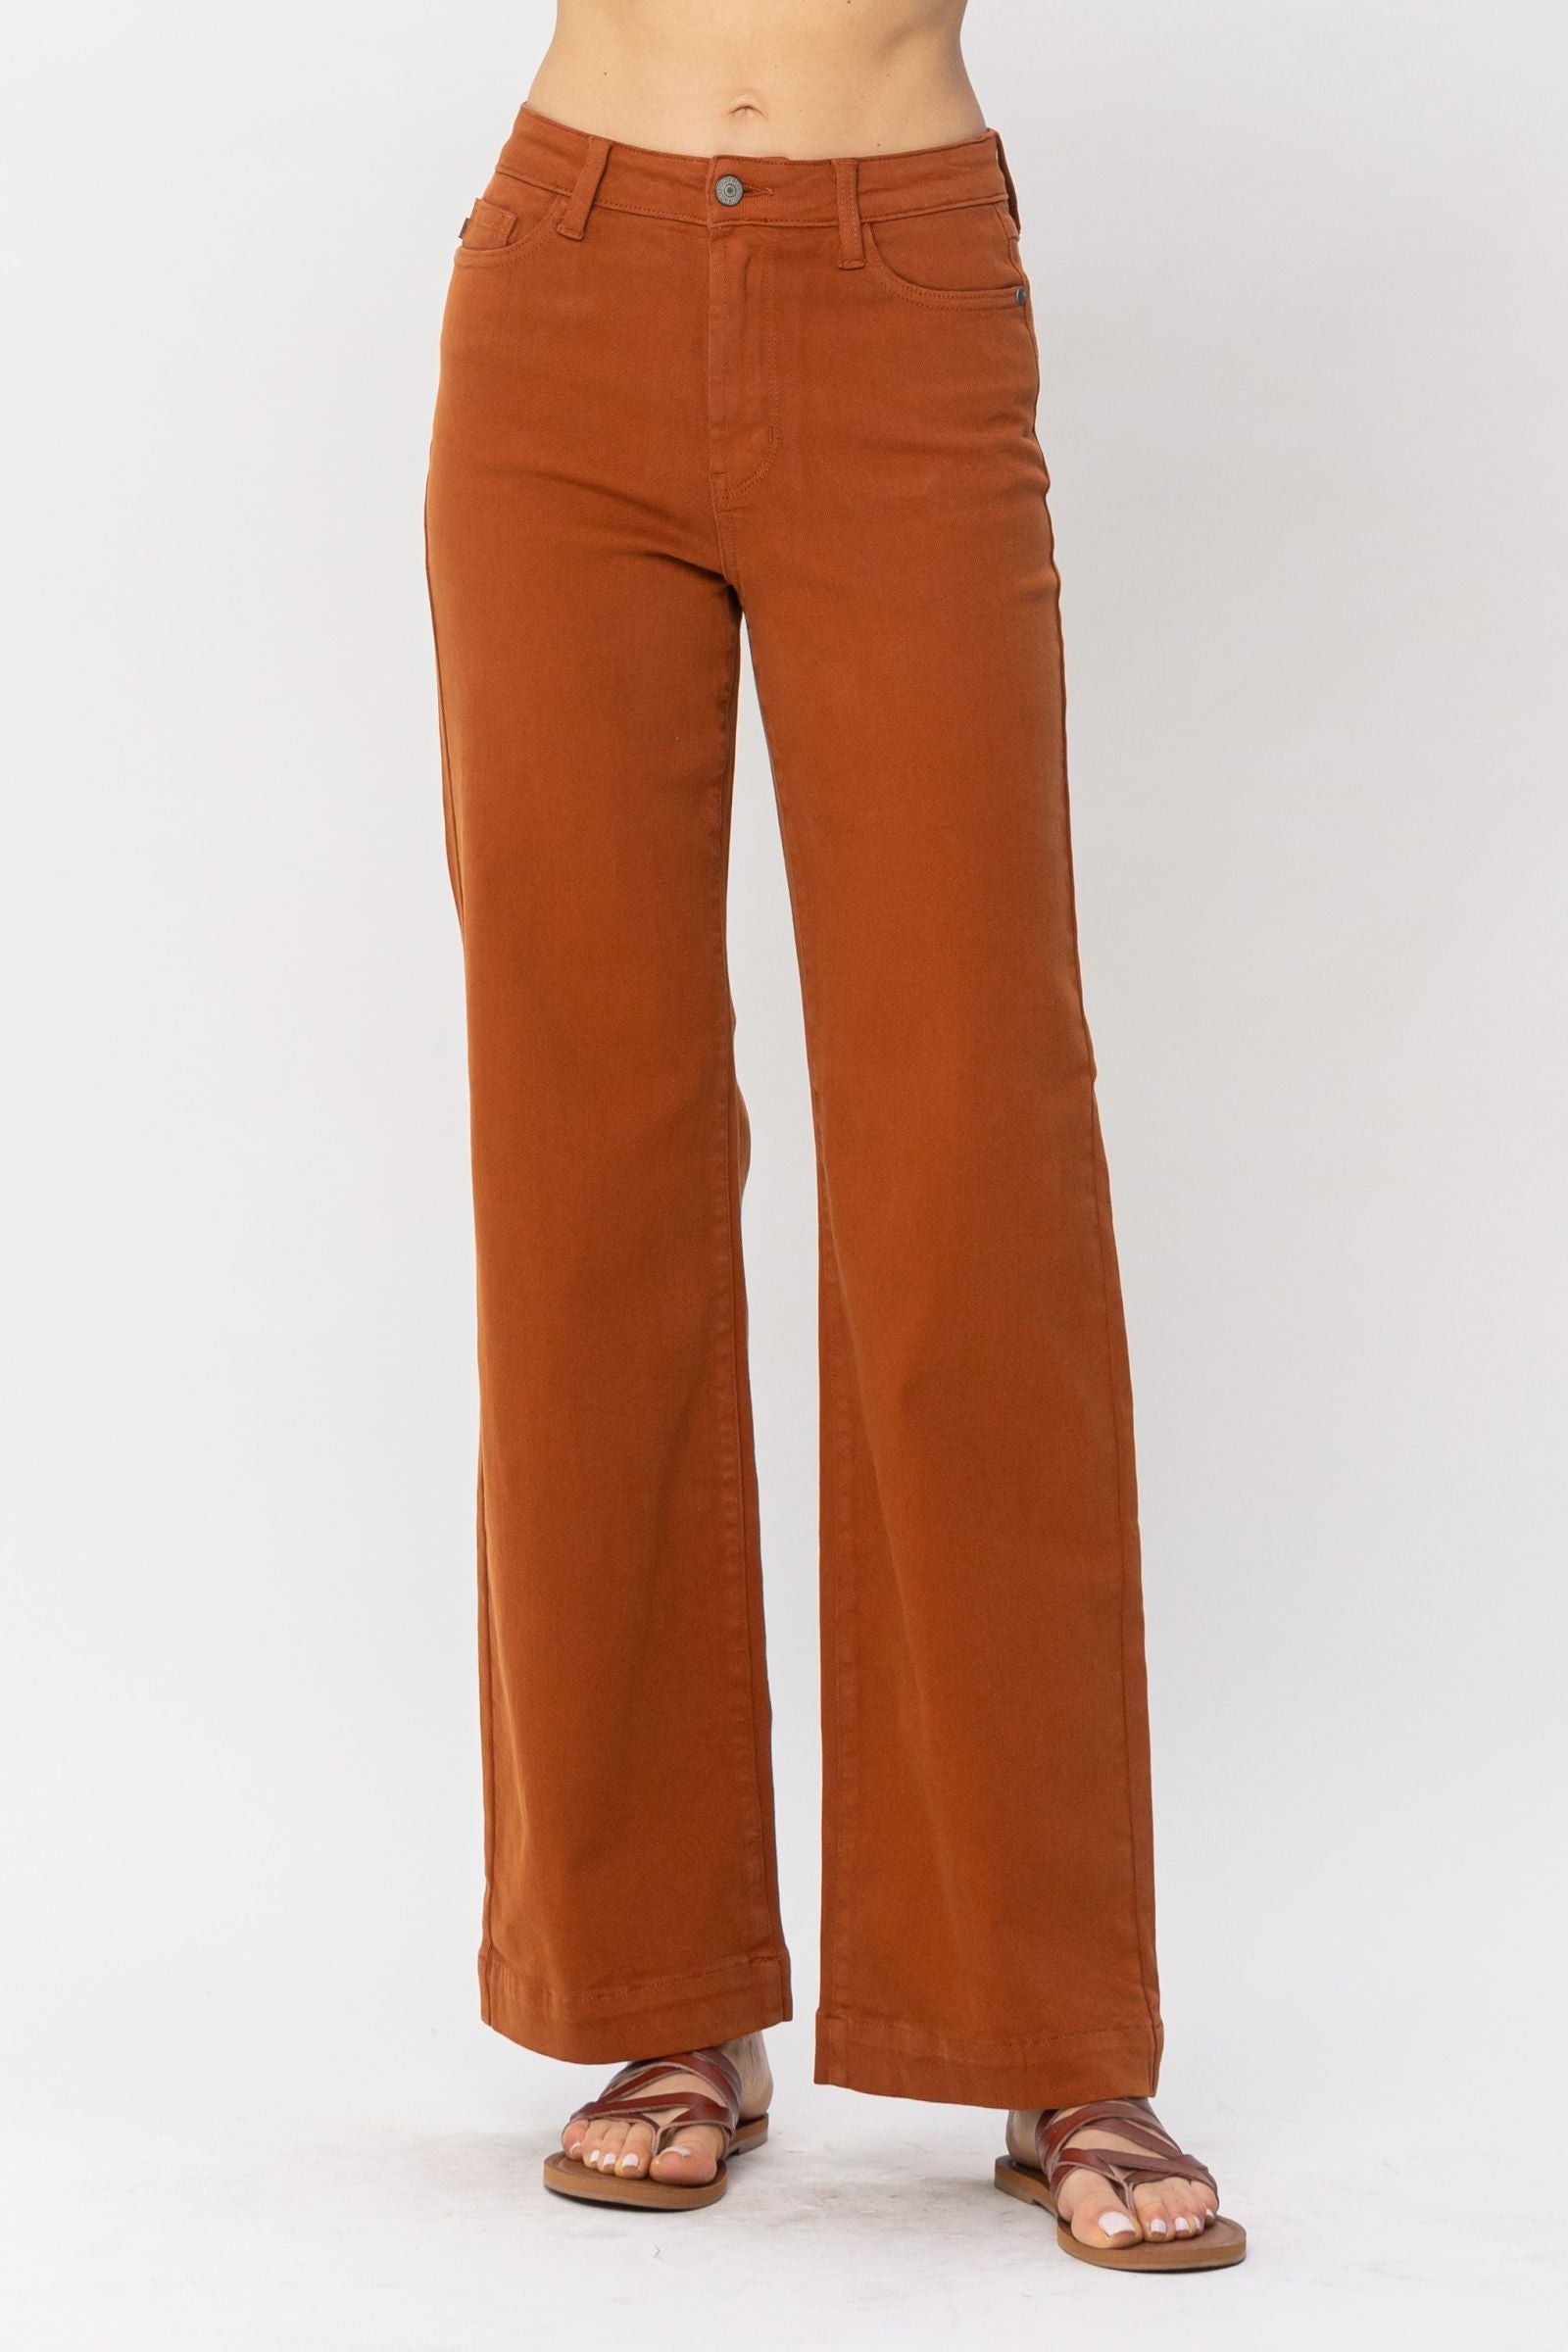 Judy Blue Game Day Burnt Orange High Rise Garment Dyed Wide Leg